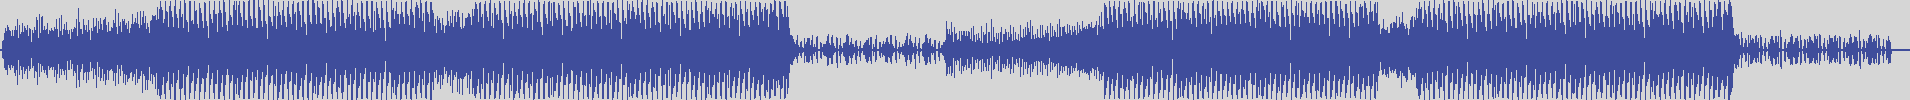 nf_boyz_records [NFY071] Frankie Cove - All Topics [Tech Rhythms Mix] audio wave form